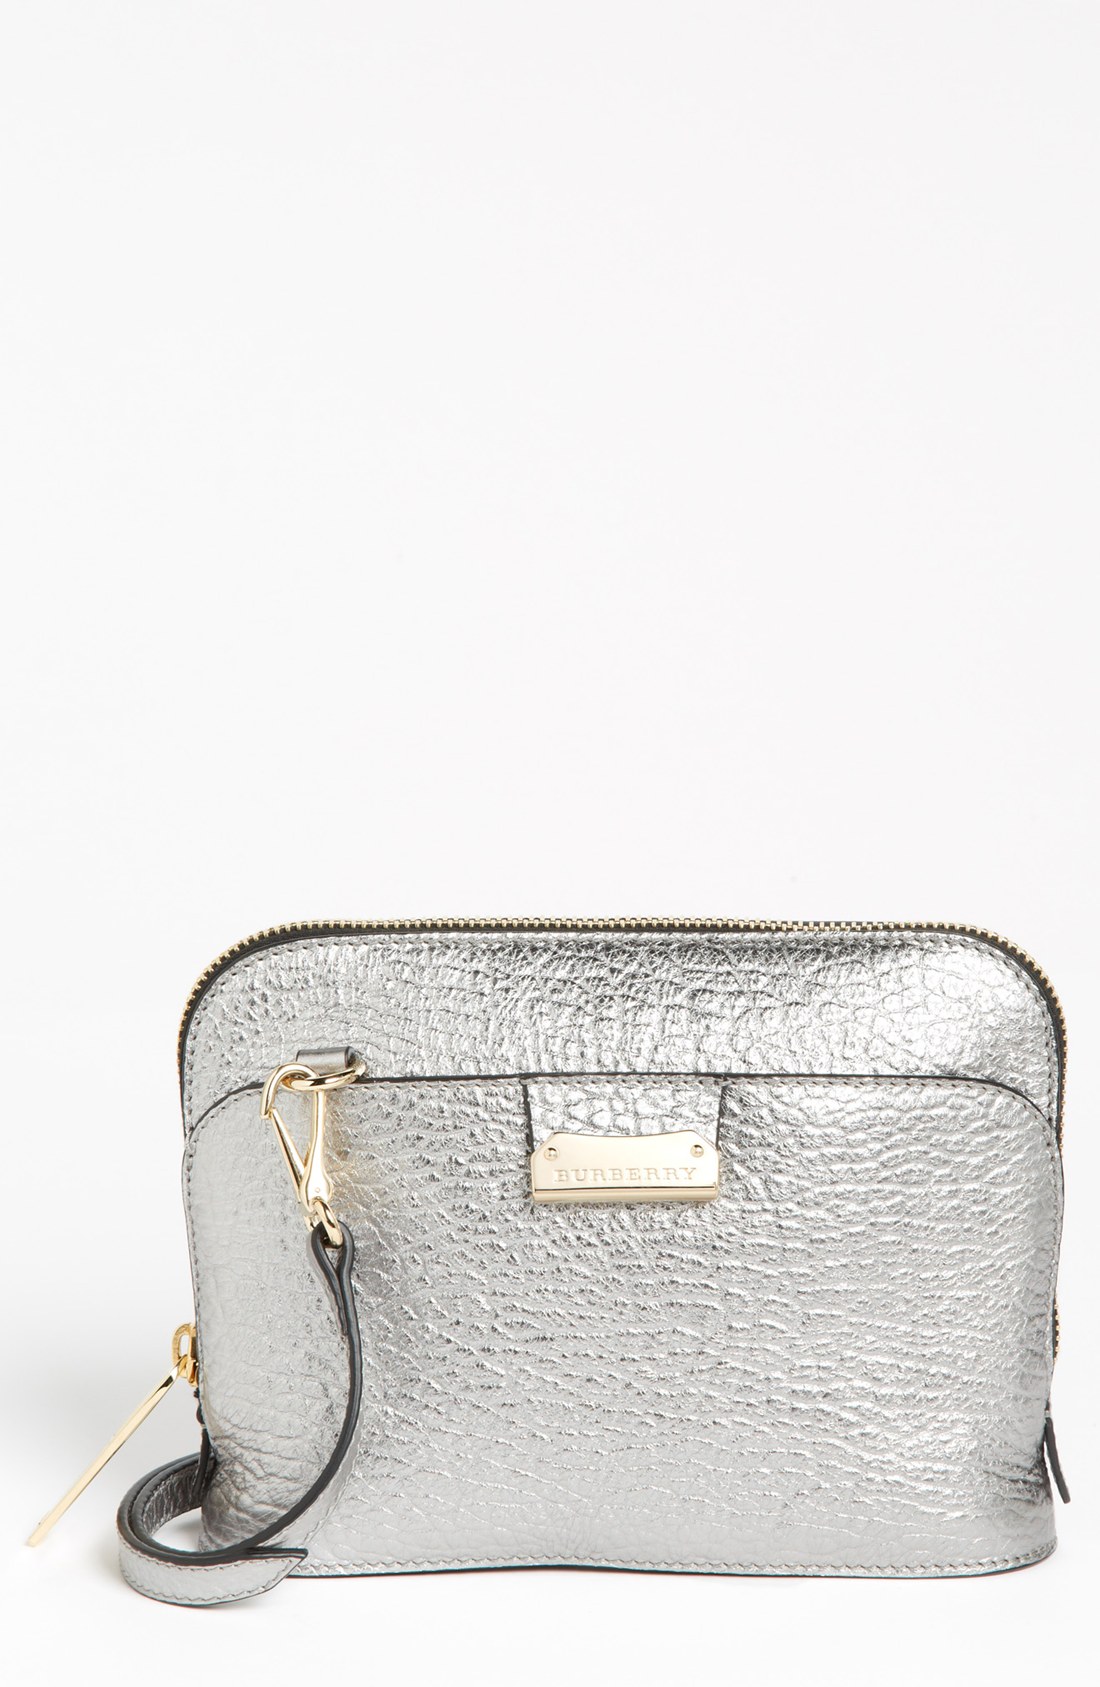 Small Silver Handbag. OULII Fashion Glitter Bag Handbag Party Evening Clutch Shoulder Bag for ...